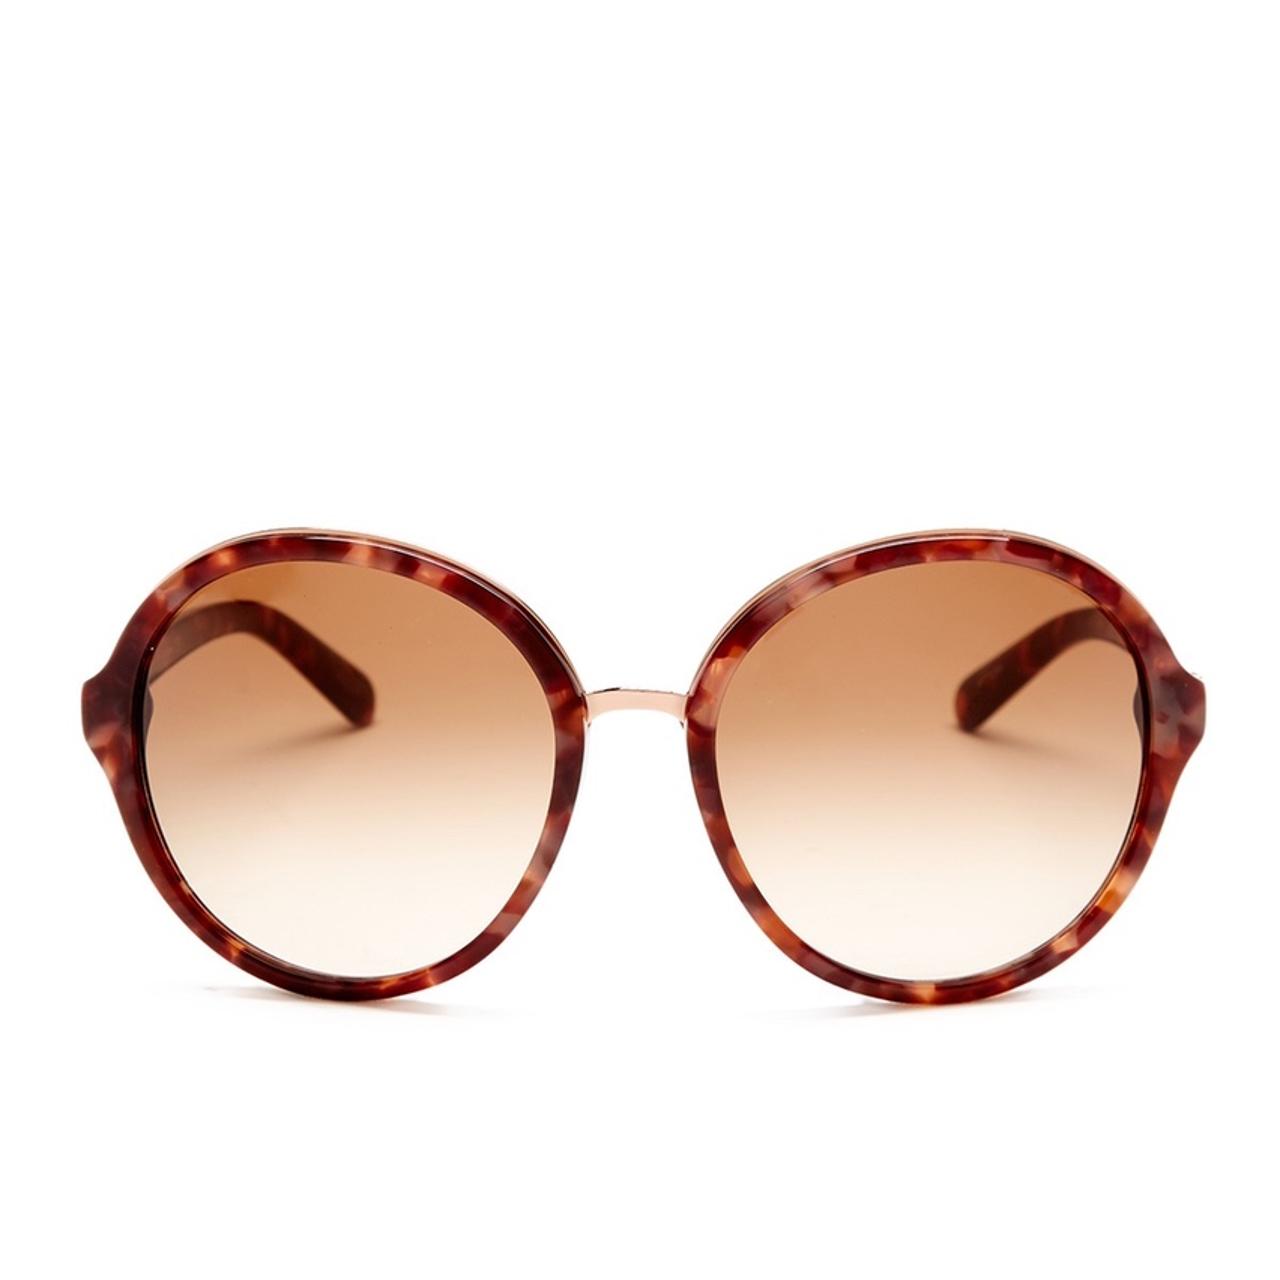 Kate Spade New York Women's Sunglasses | Depop